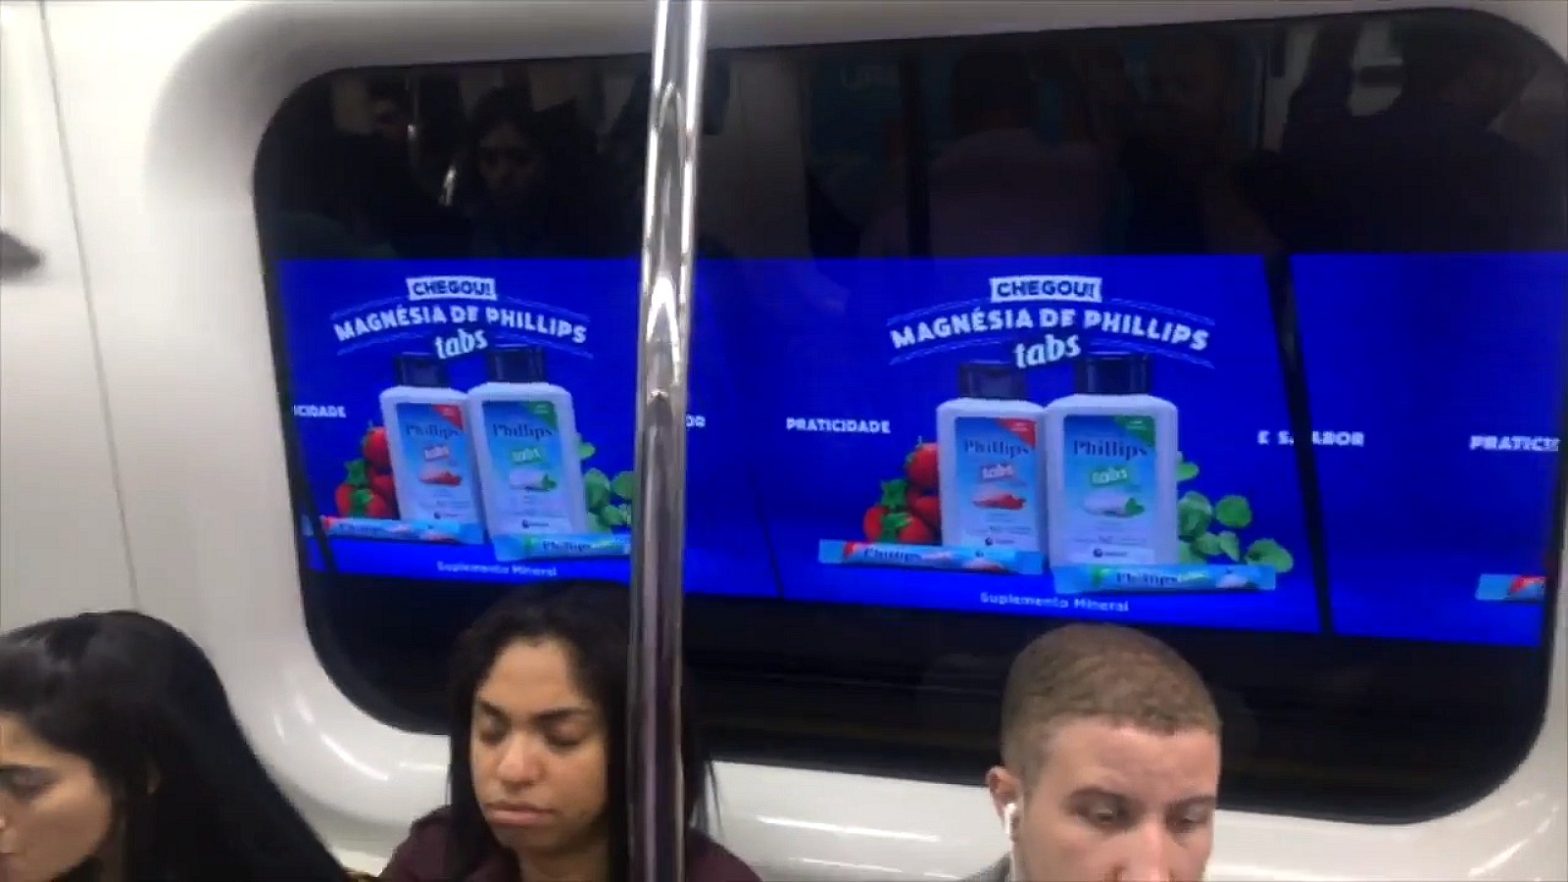 Aspen Pharma veicula campanha do Magnésia de Phillips Tabs dentro do túnel do metrô